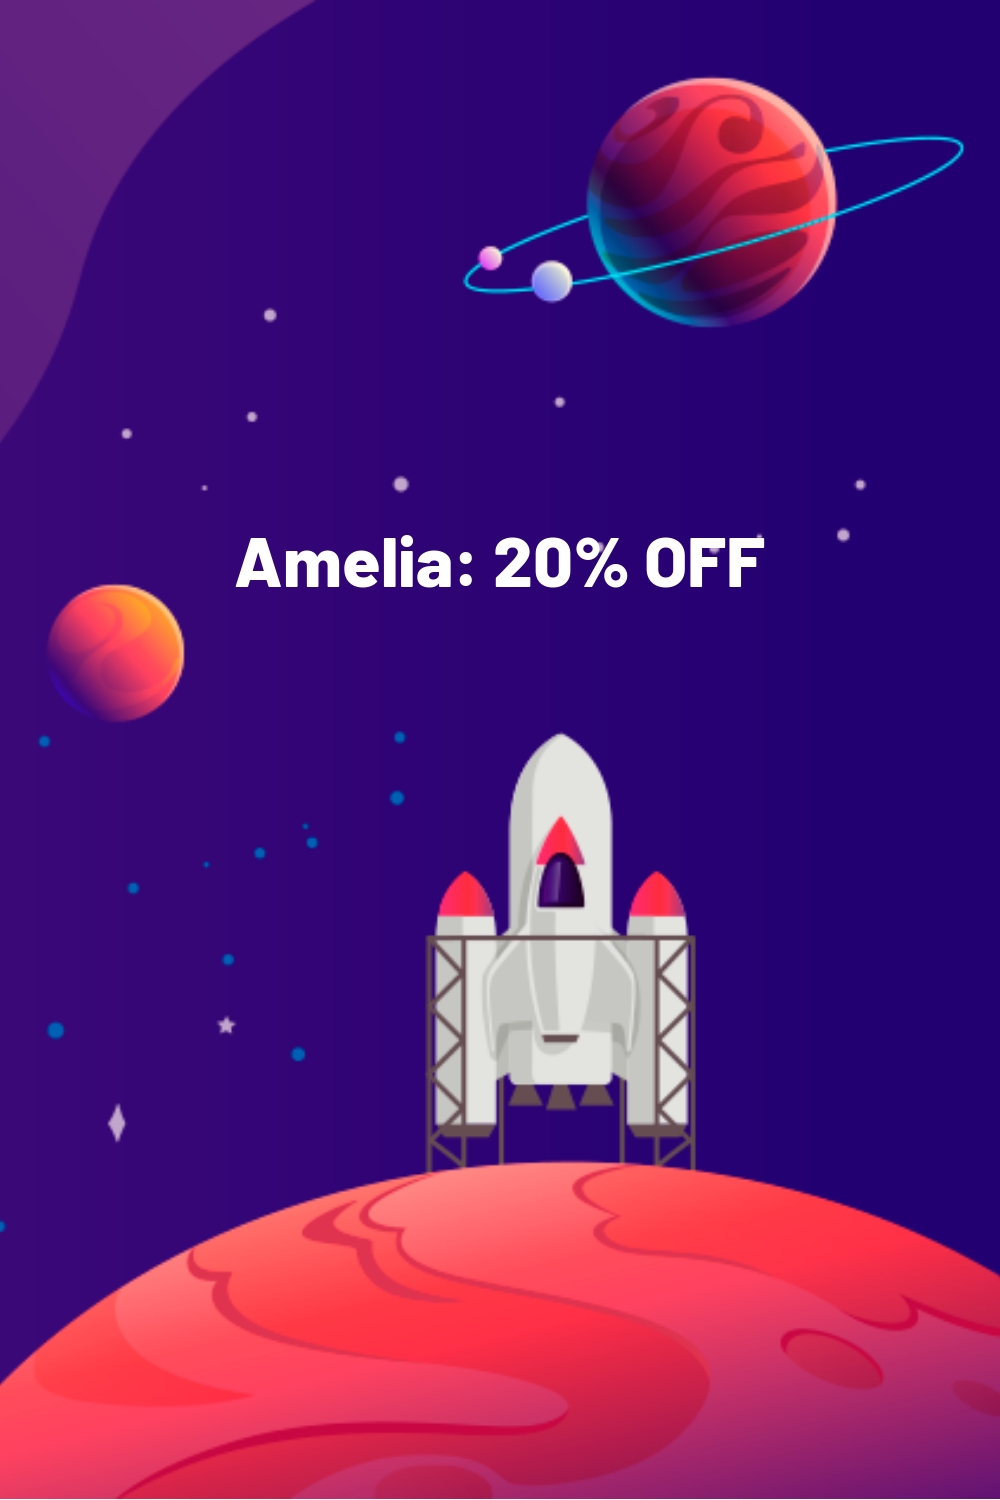 Amelia: 20% OFF